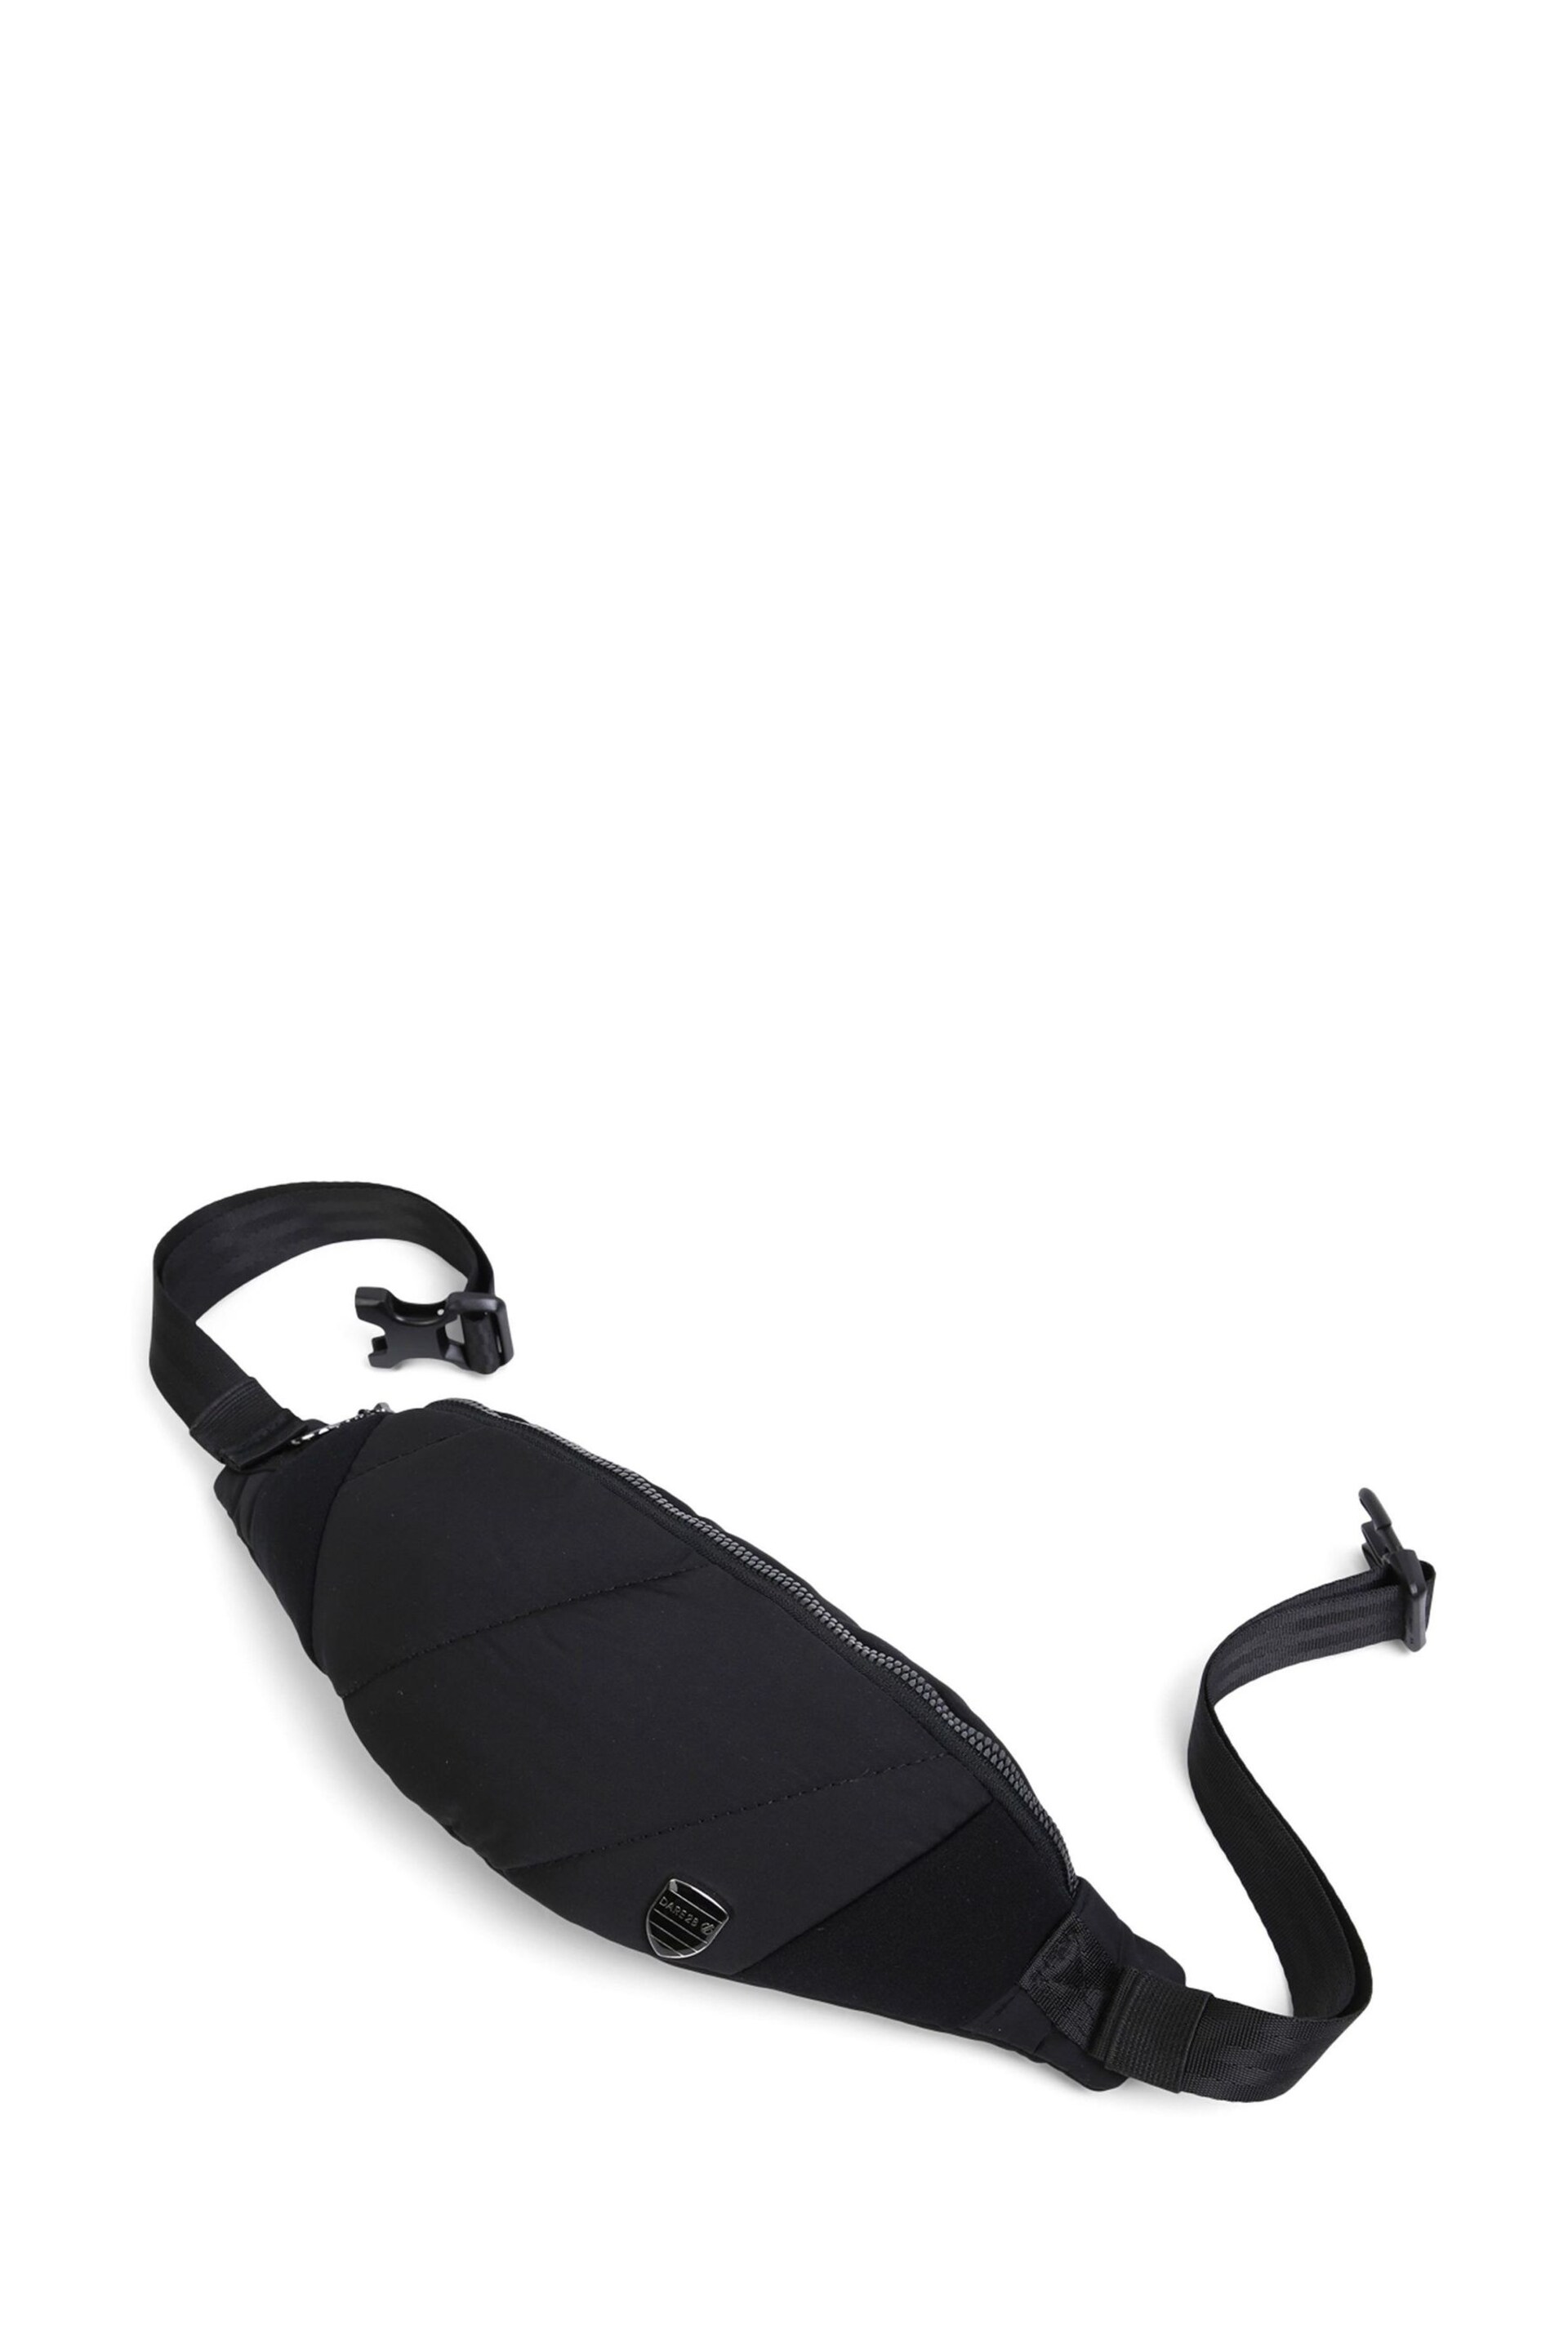 Dare 2b Black Luxe Bum Bag - Image 4 of 11